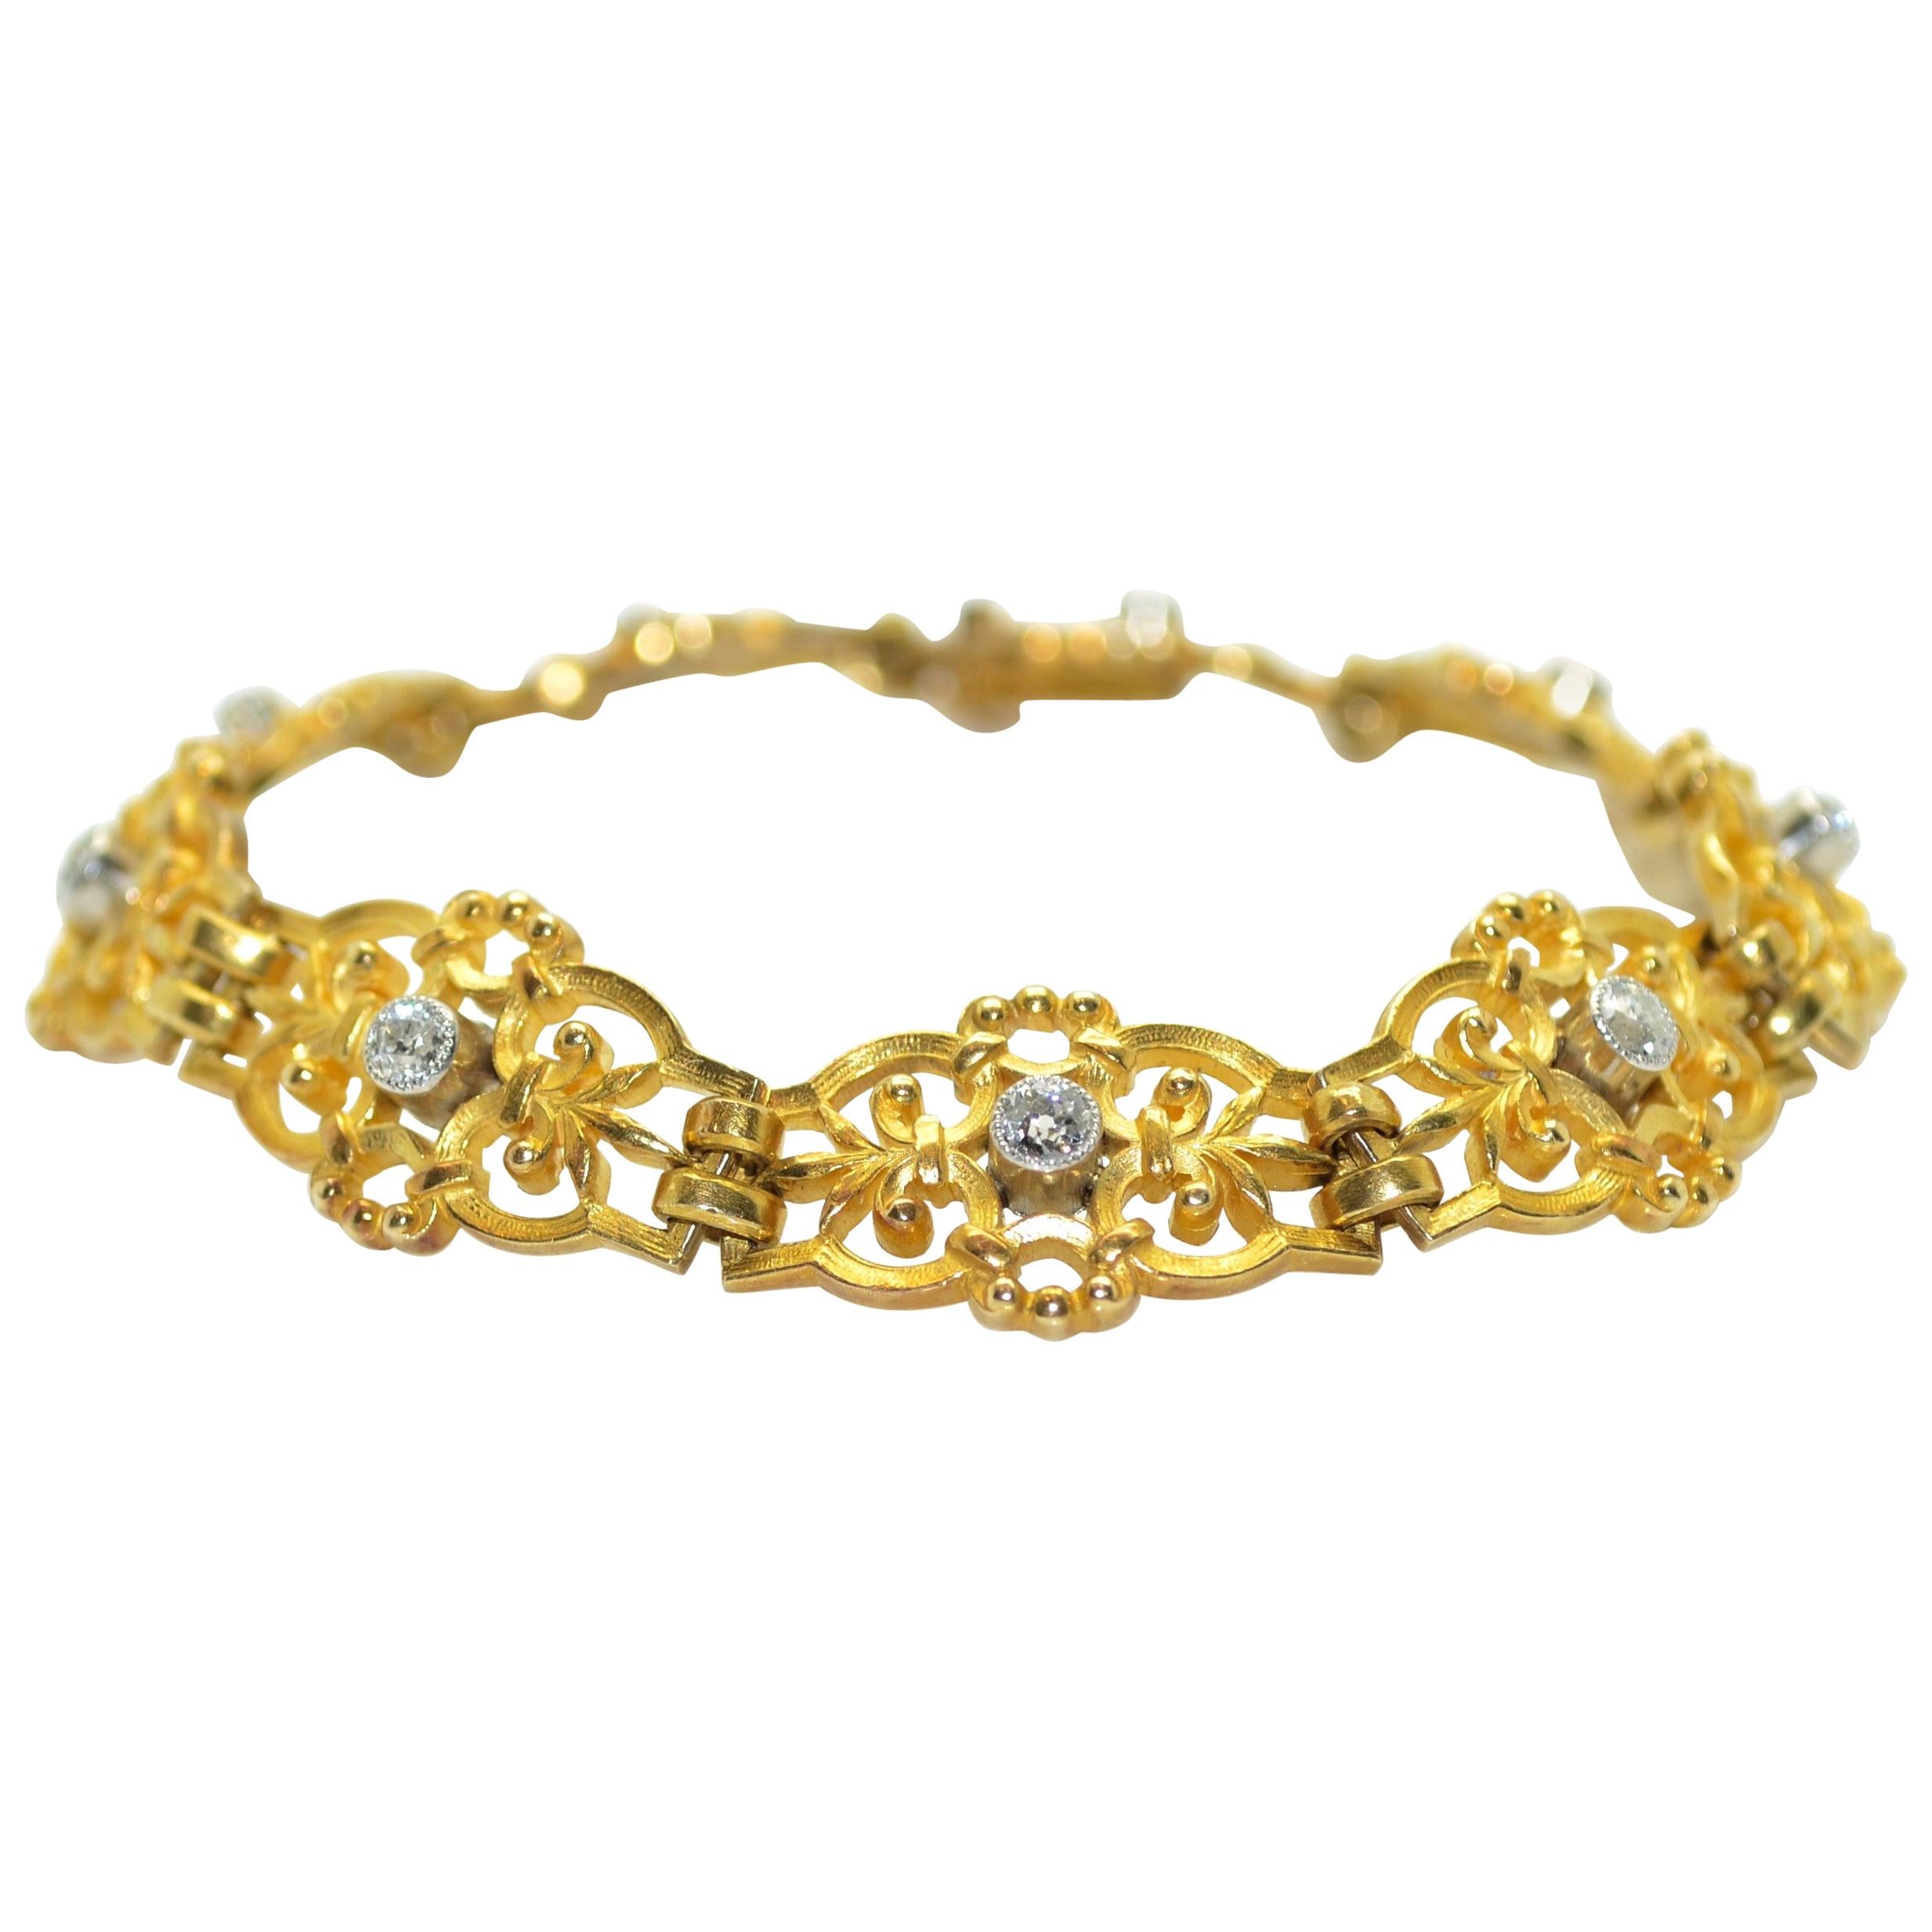 Antique 18 Karat Yellow Gold and Diamonds French Bracelet